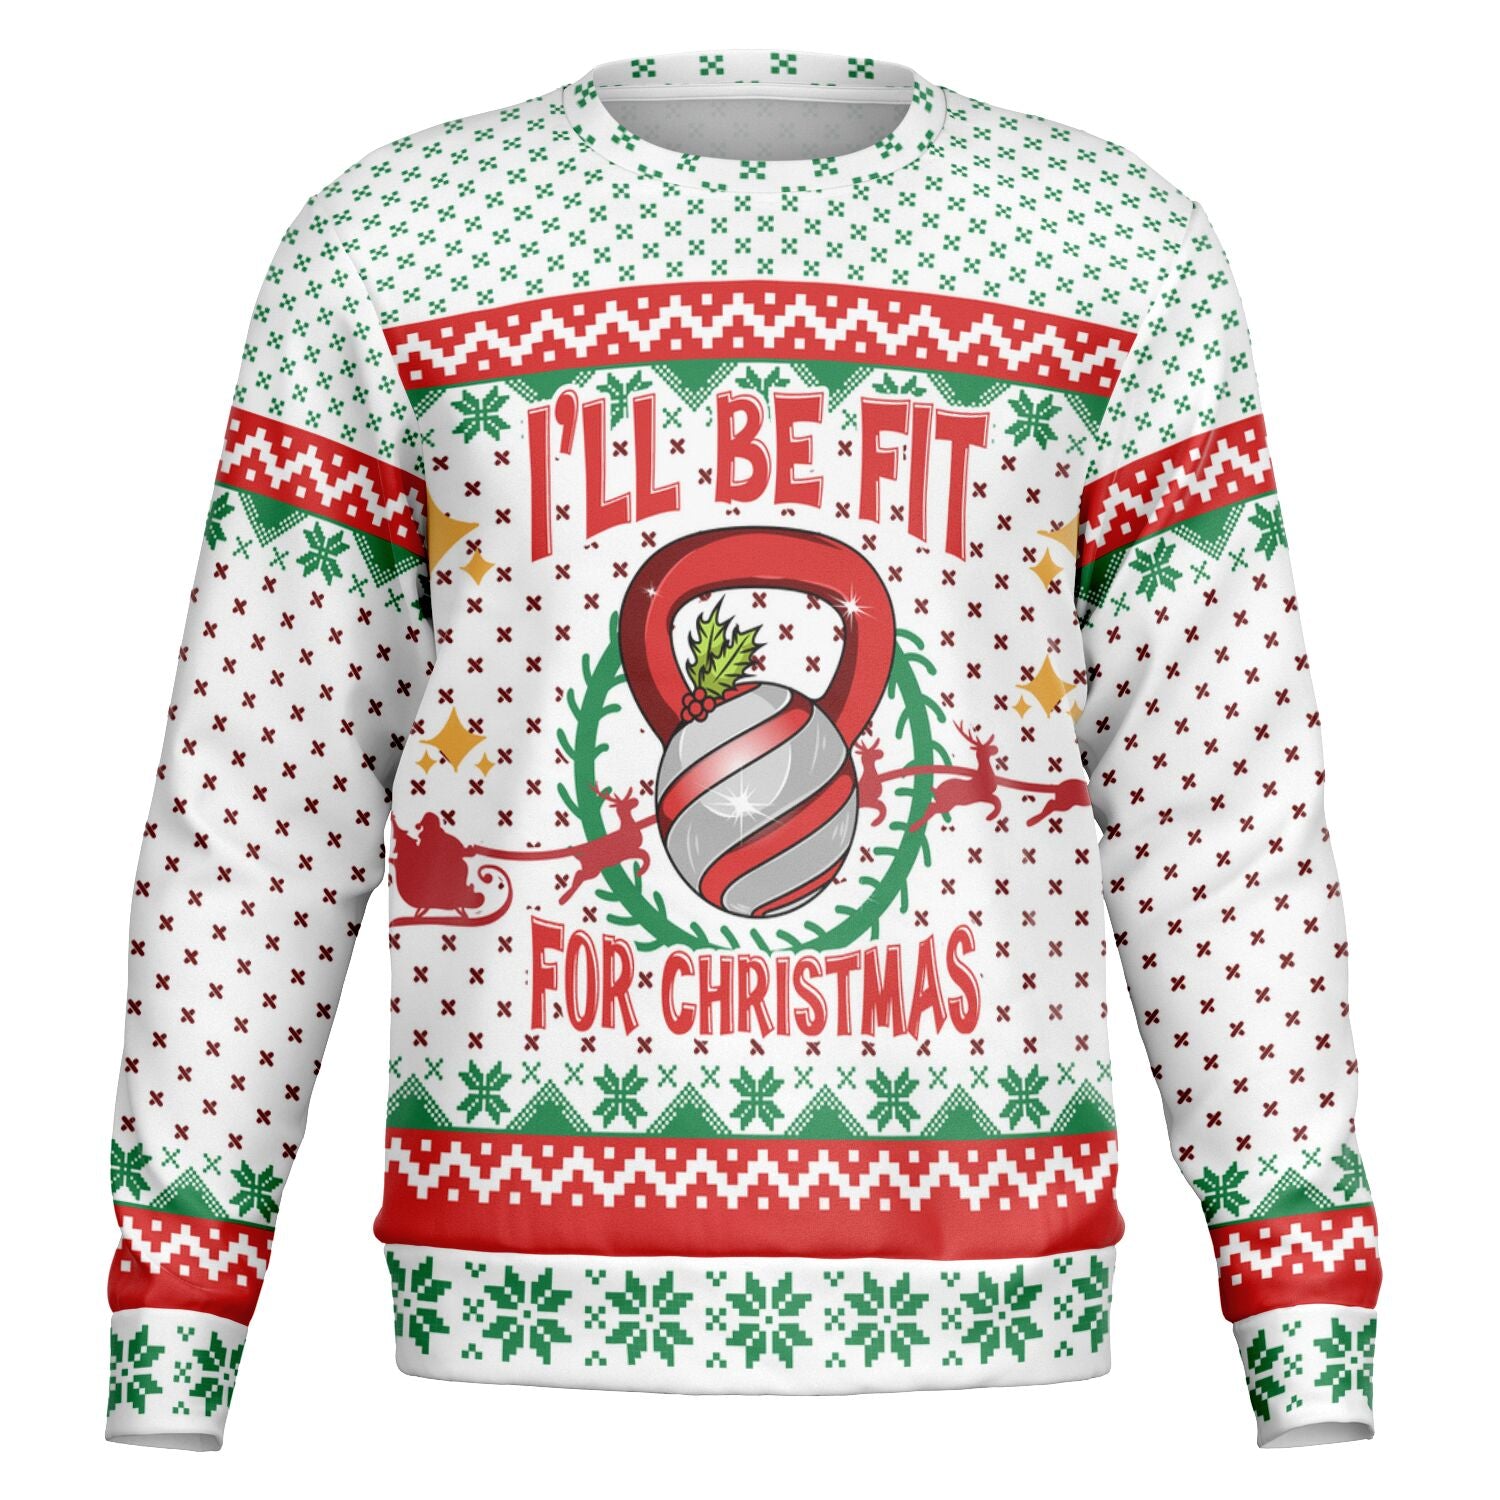 Fit for Christmas Sweatshirt